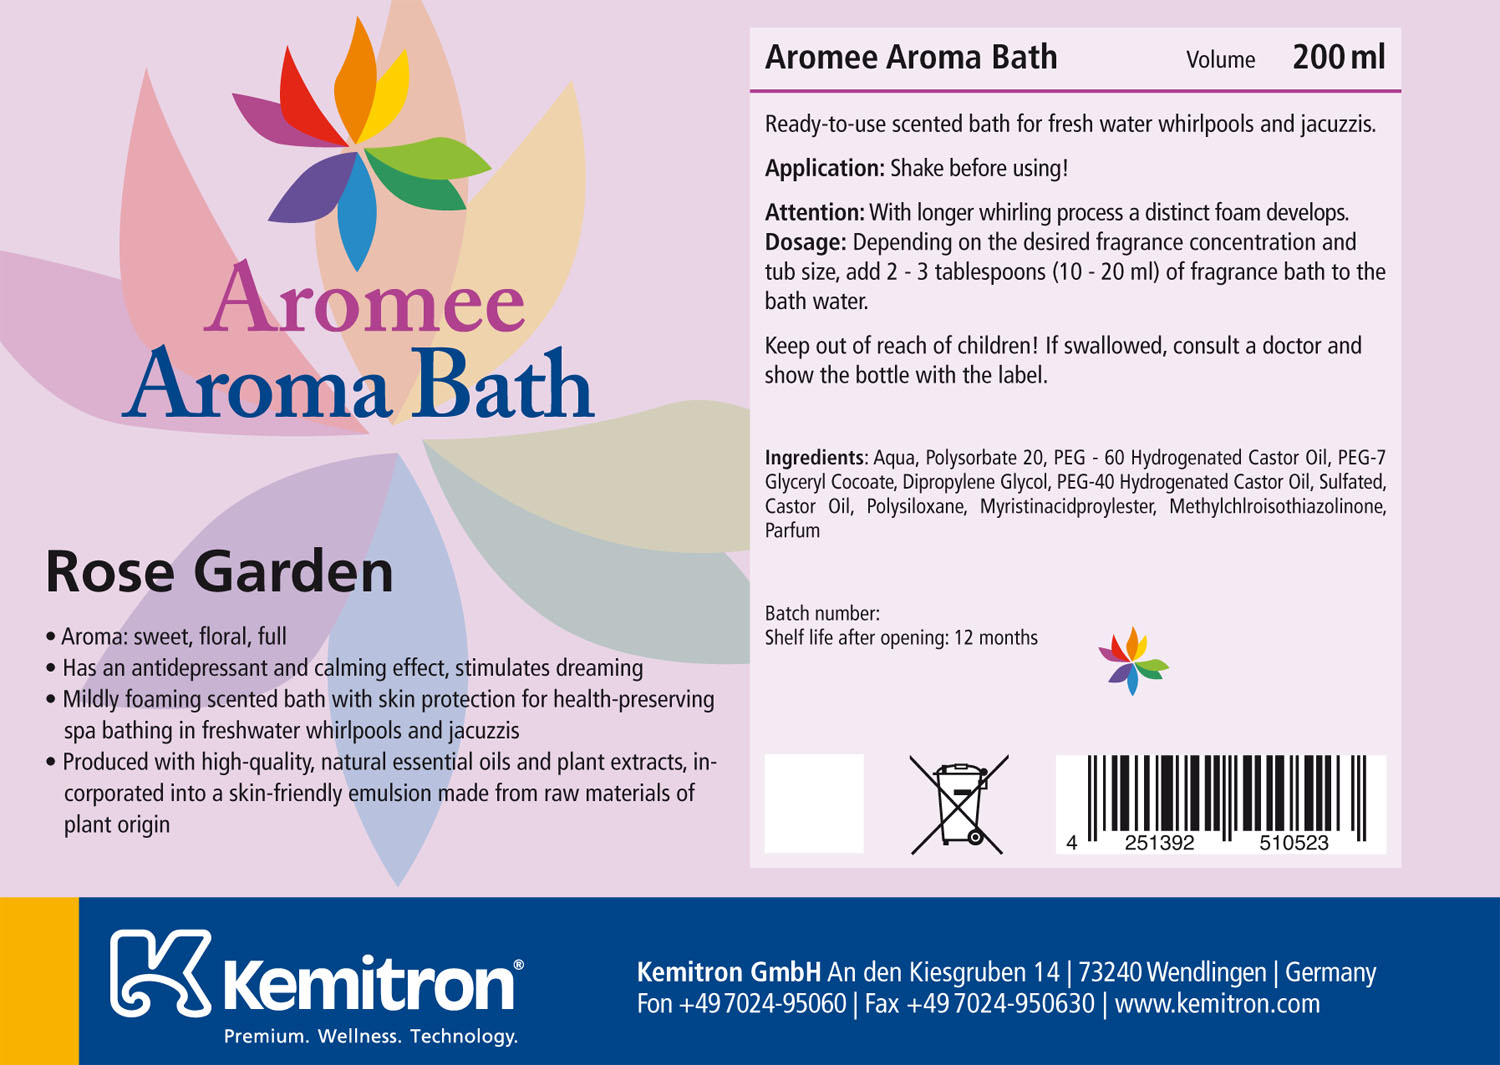 Aromee Aromabath "Rose Garden"